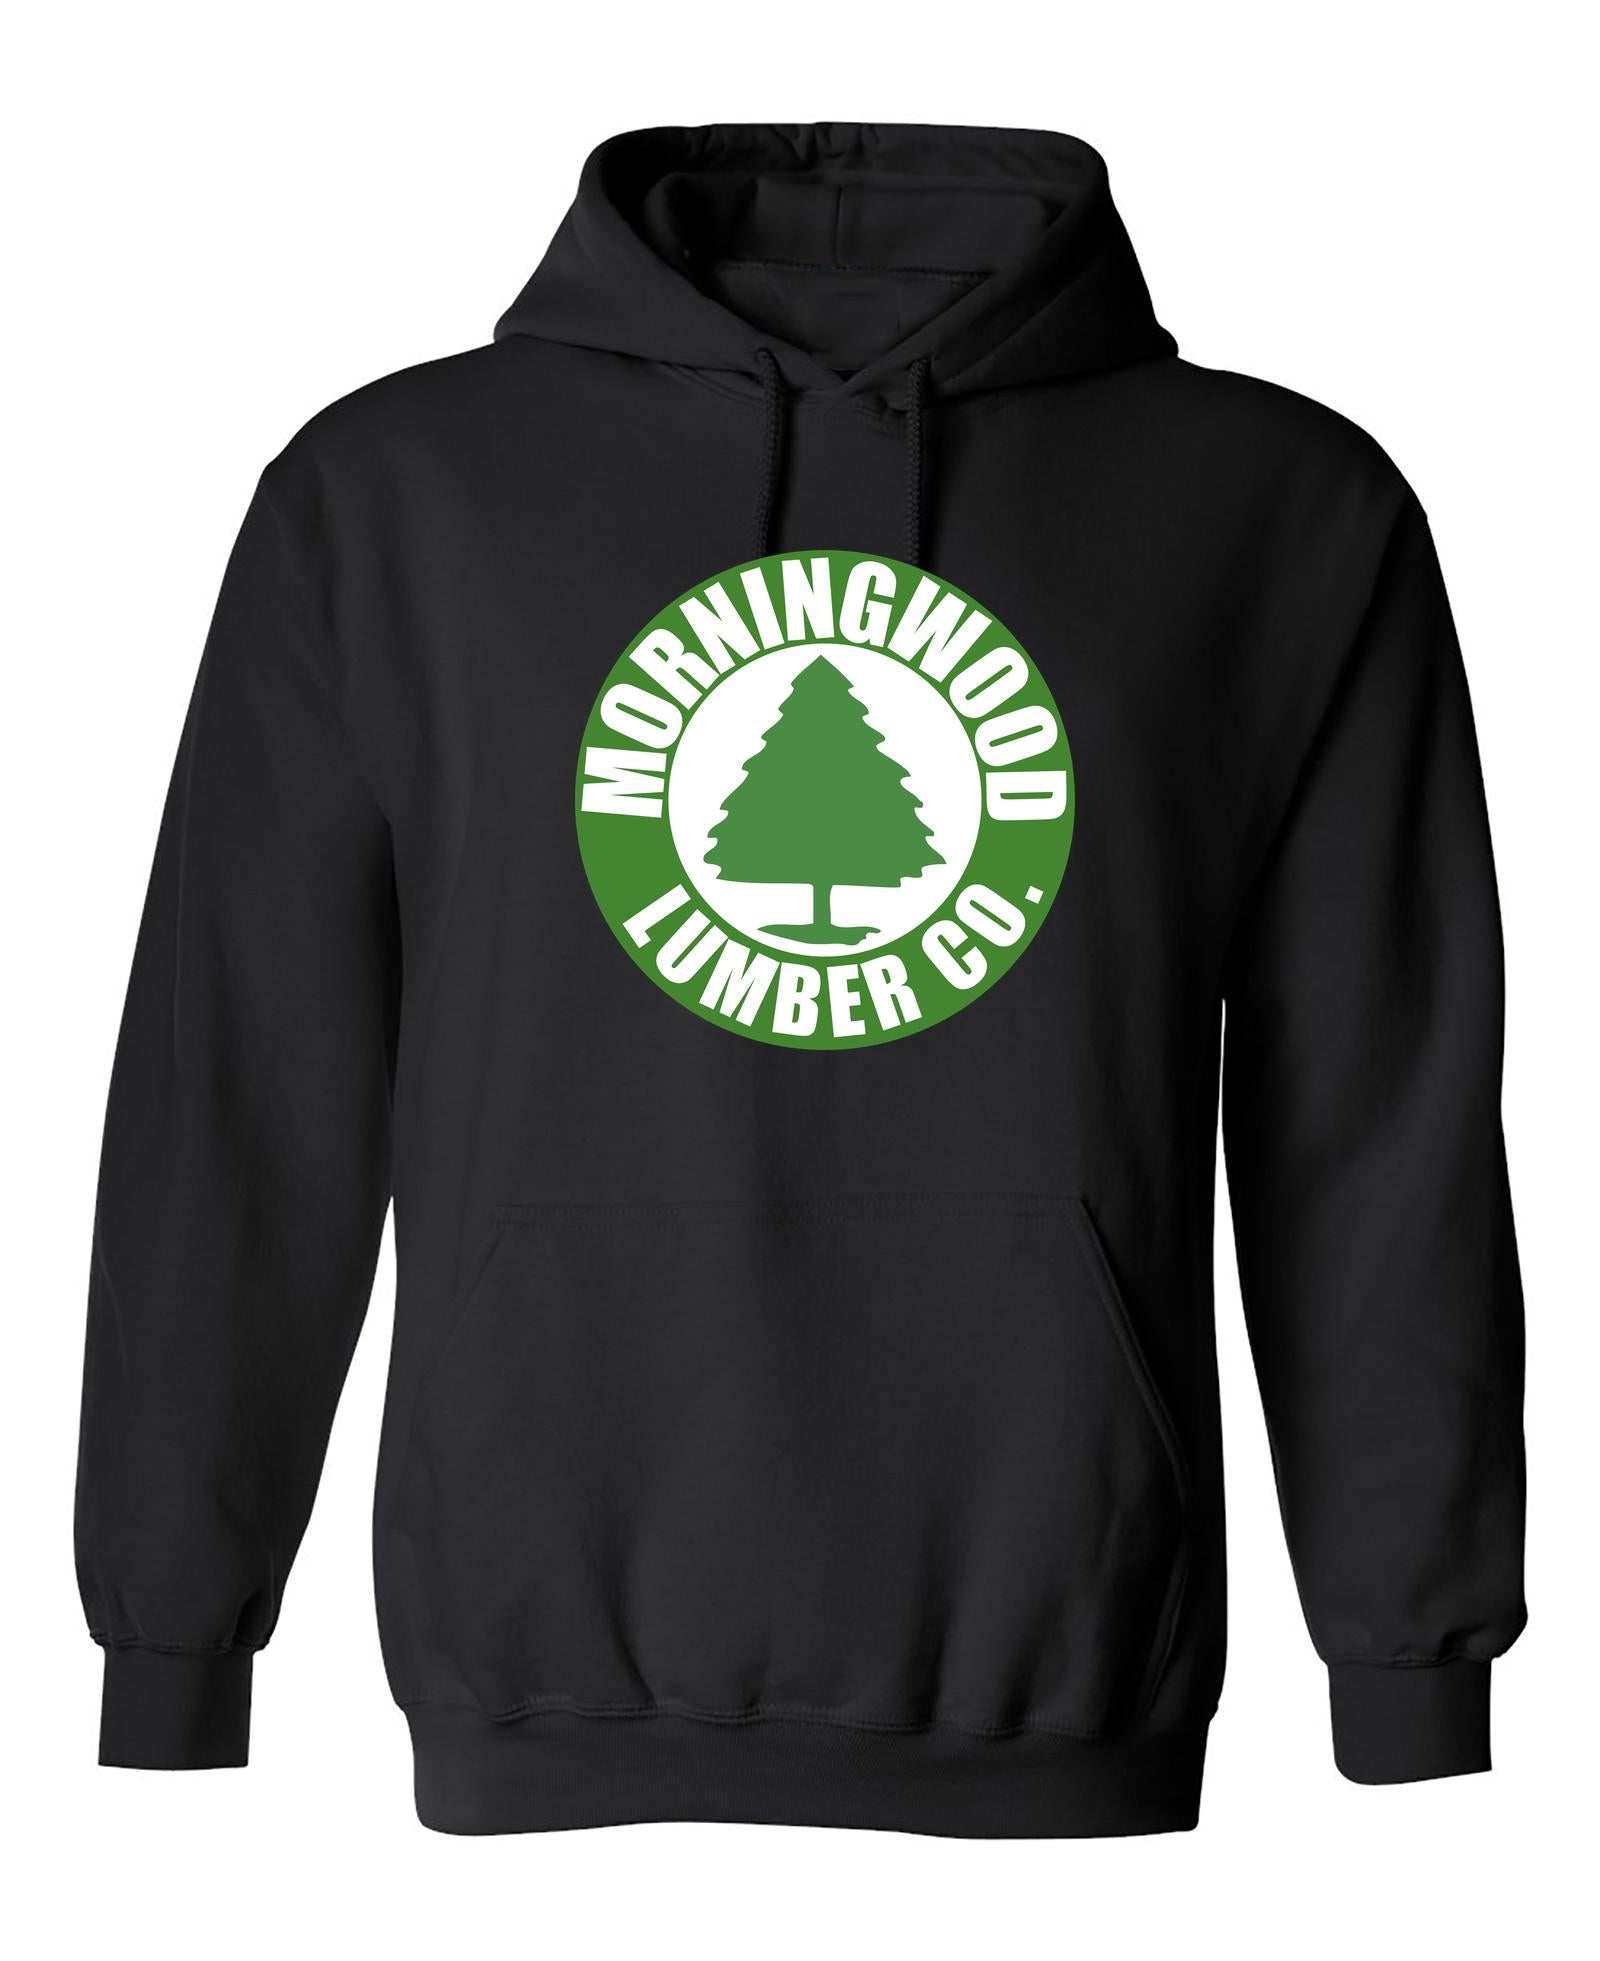 Funny T-Shirts design "Morningwood Lumber"